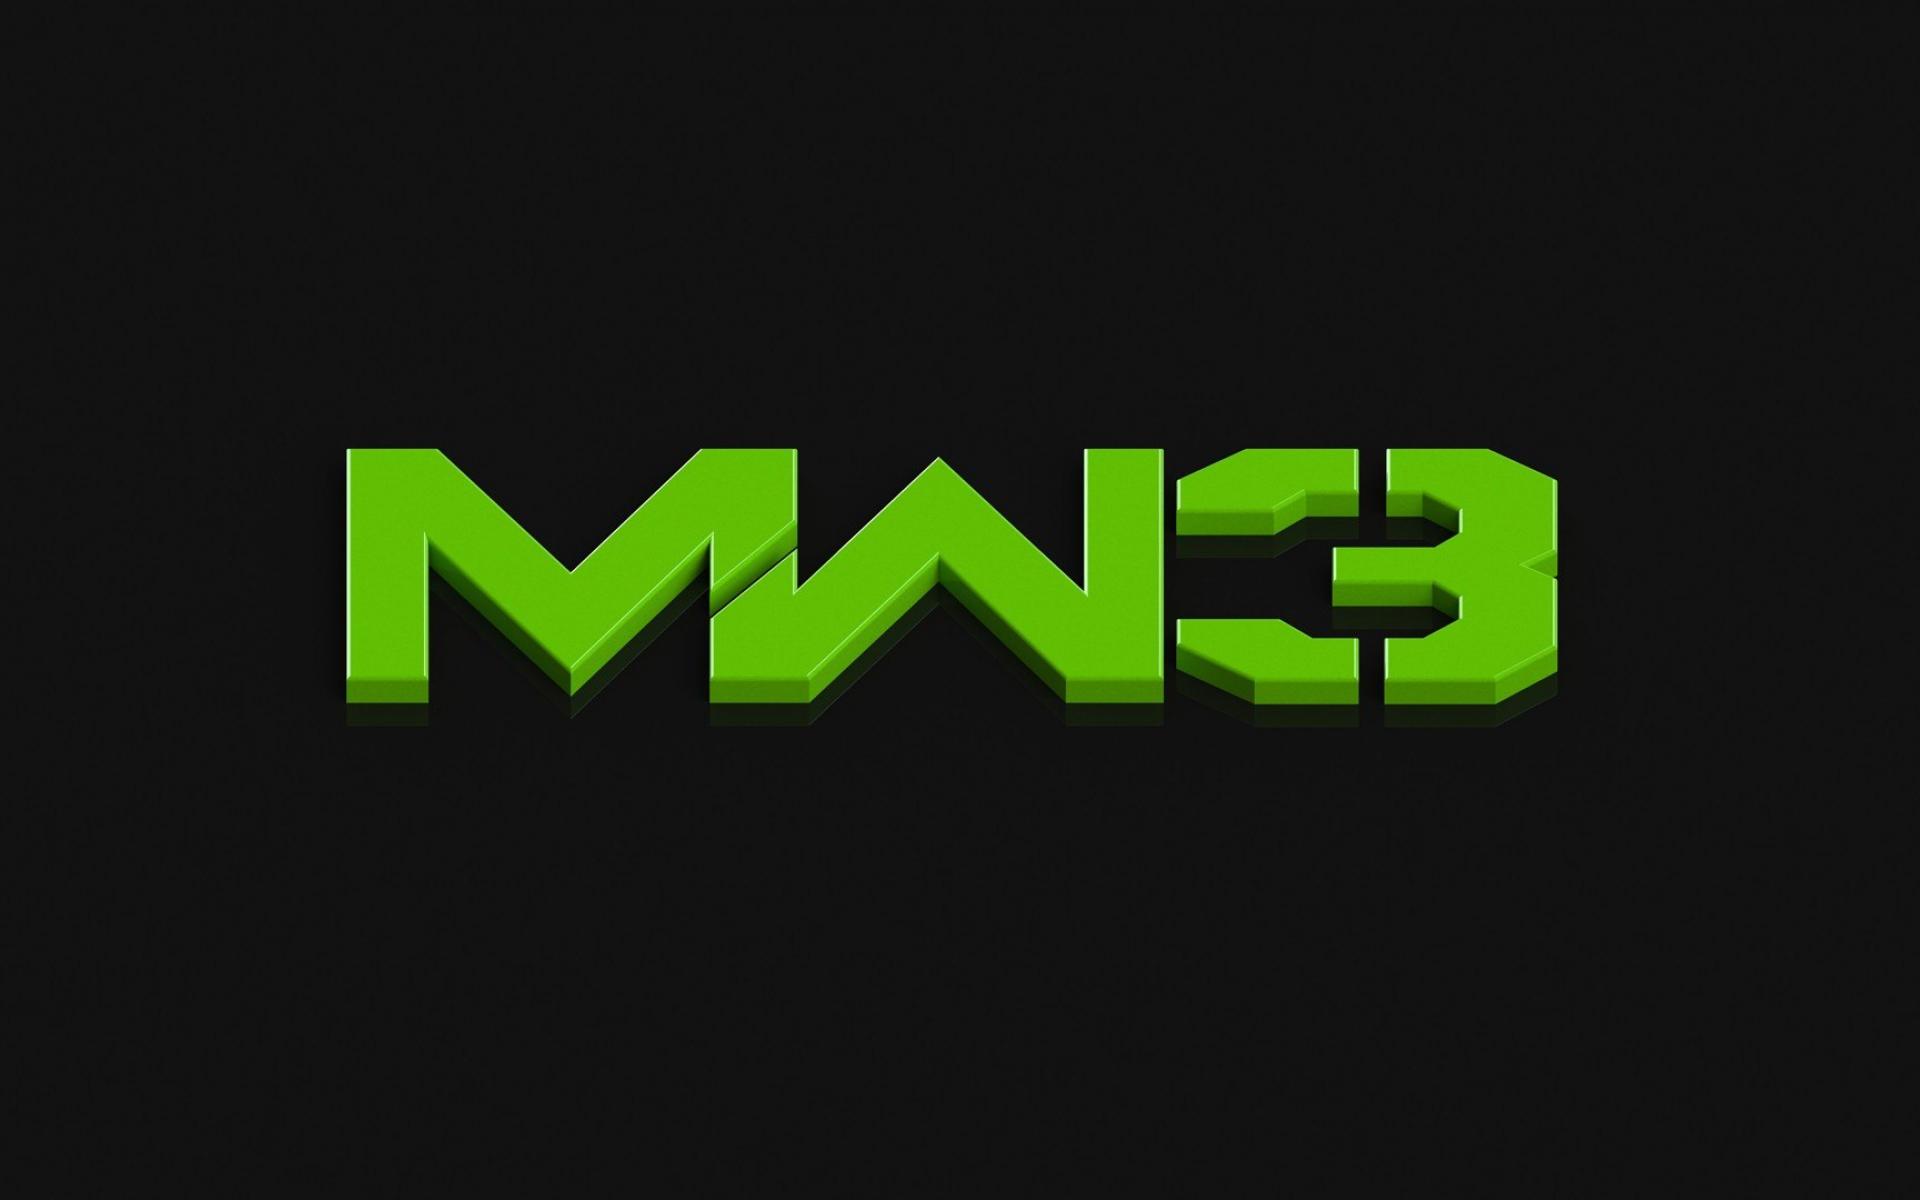 Полная настройка конфига в COD MW3 - самый крутой гайд! for Call of Duty: Modern Warfare 3 - Multiplayer